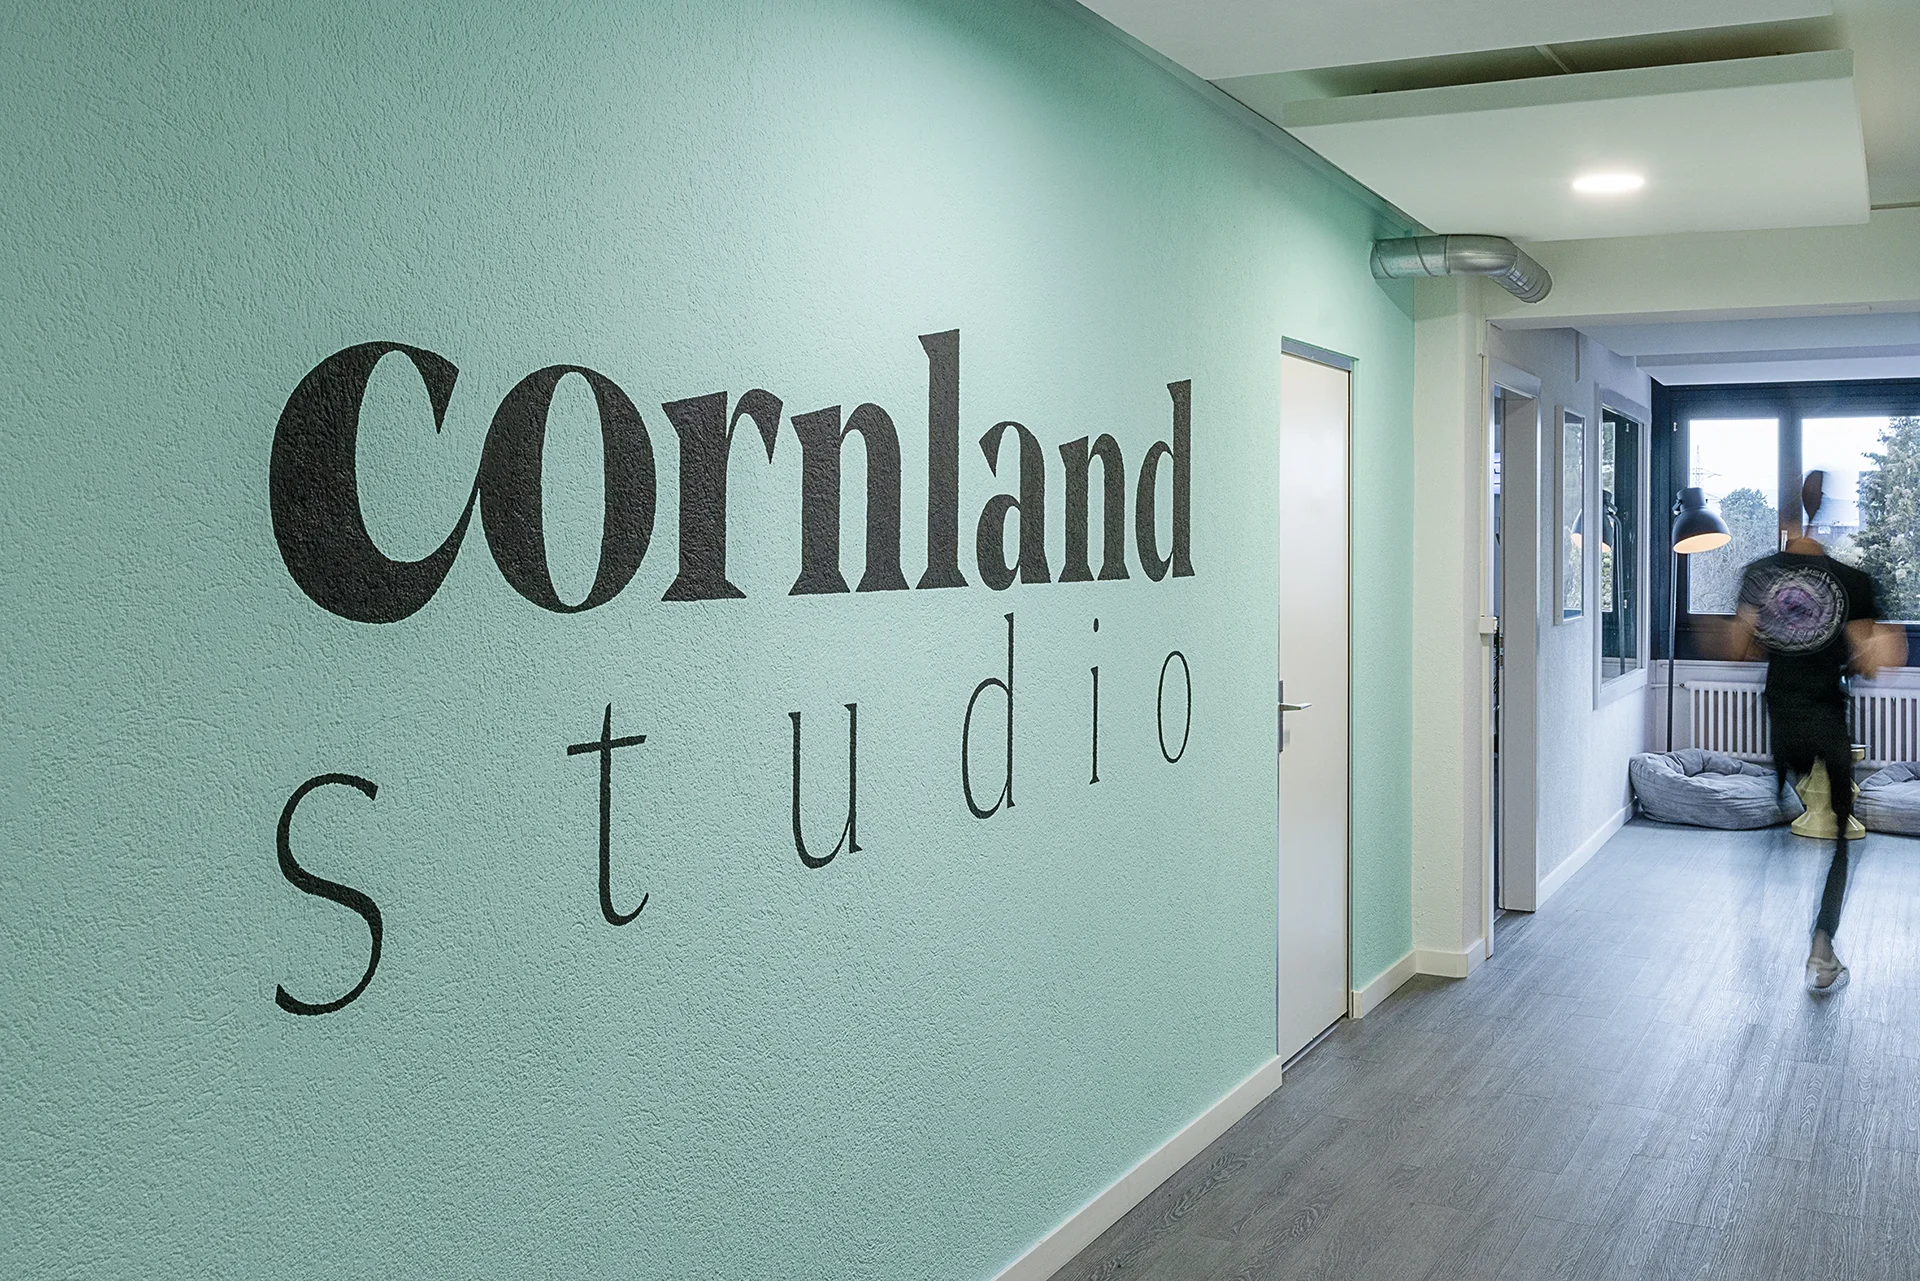 Cornland Studio - logo Cornland Studio peint sur un mur du studio